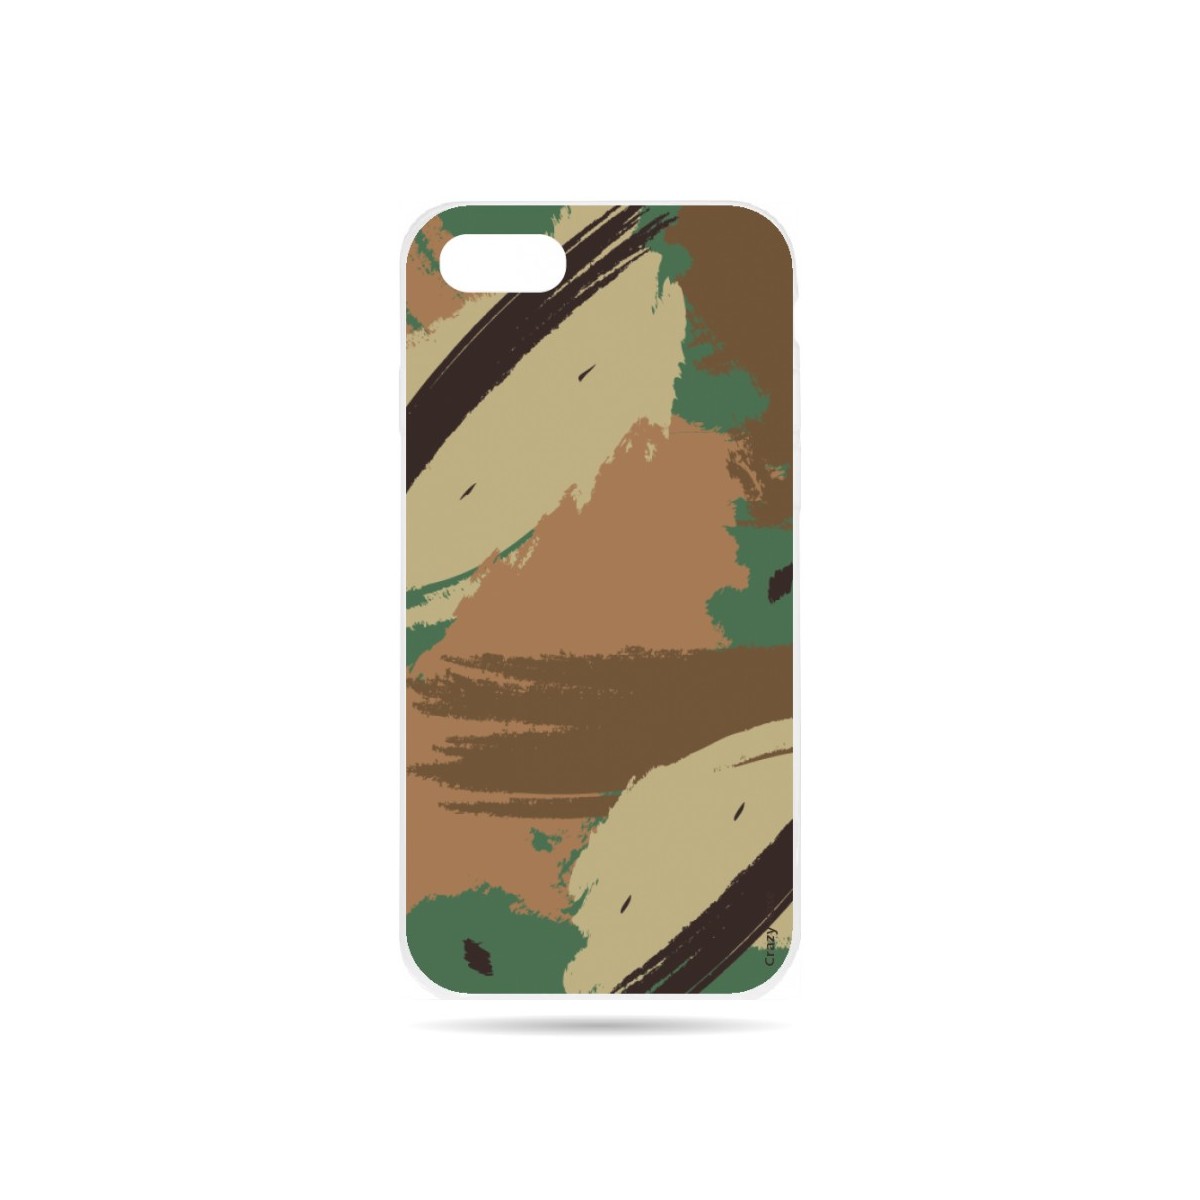 Coque iPhone 7 souple motif Camouflage - Crazy Kase